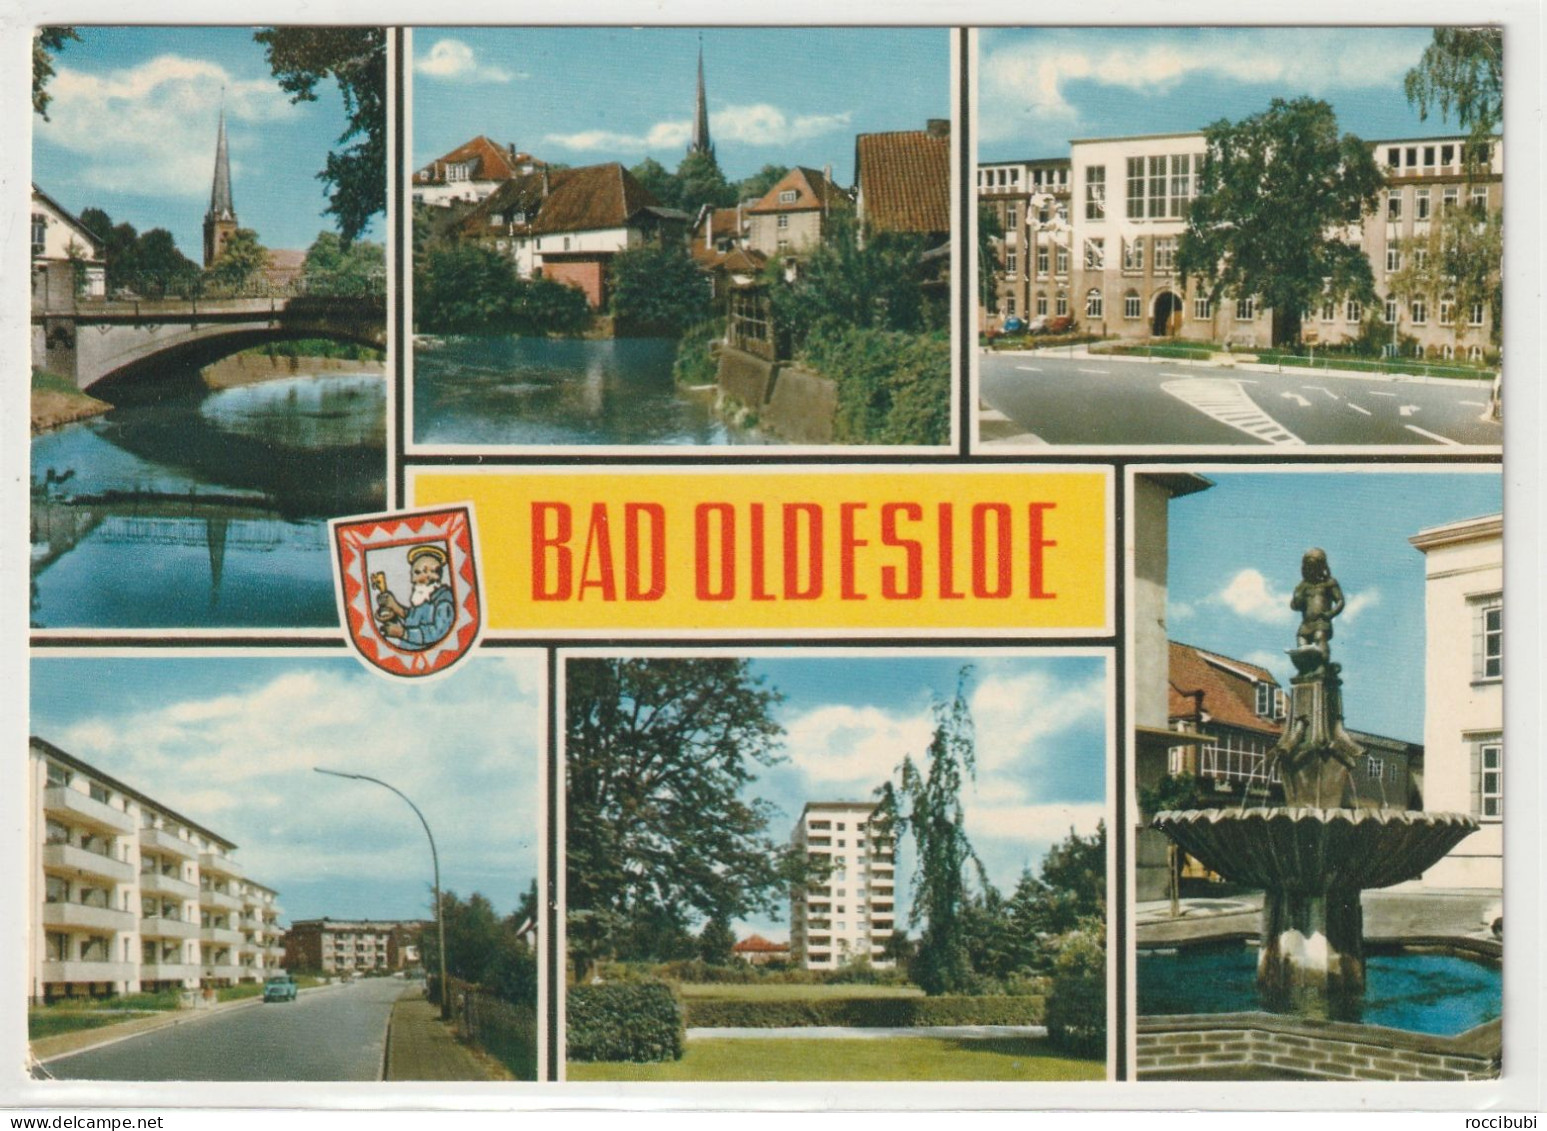 Bad Oldesloe, Schleswig-Holstein - Bad Oldesloe